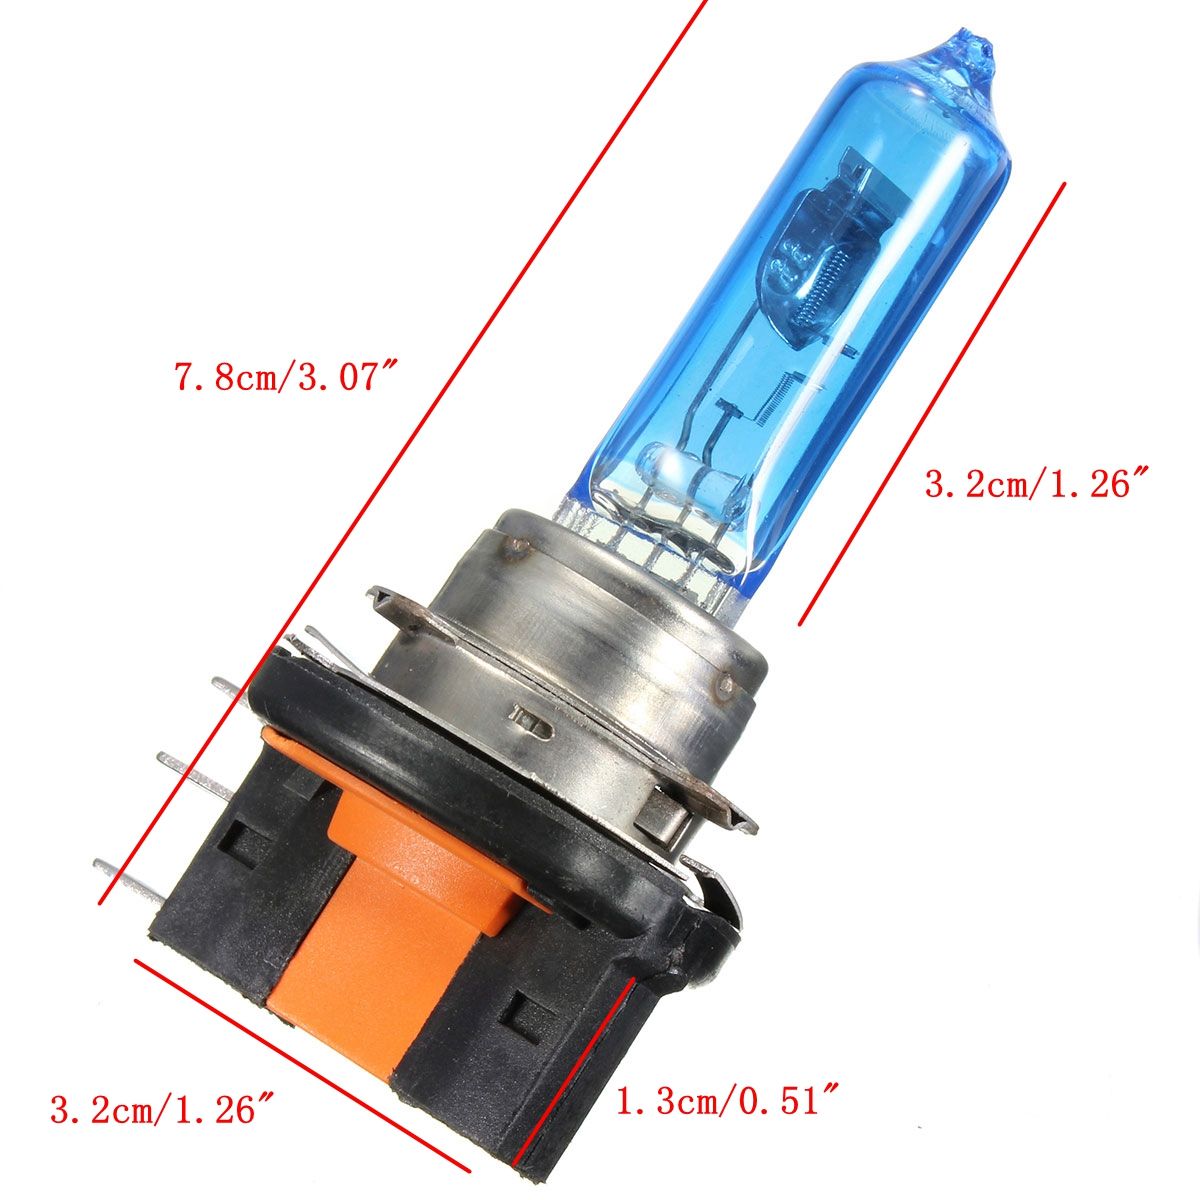 H15-55W-6000K-Car-Xenon-Bulbs-Headlight-HID-DRL-Replacement-Bulbs-for-AUDI-VW-GOLF-1013692